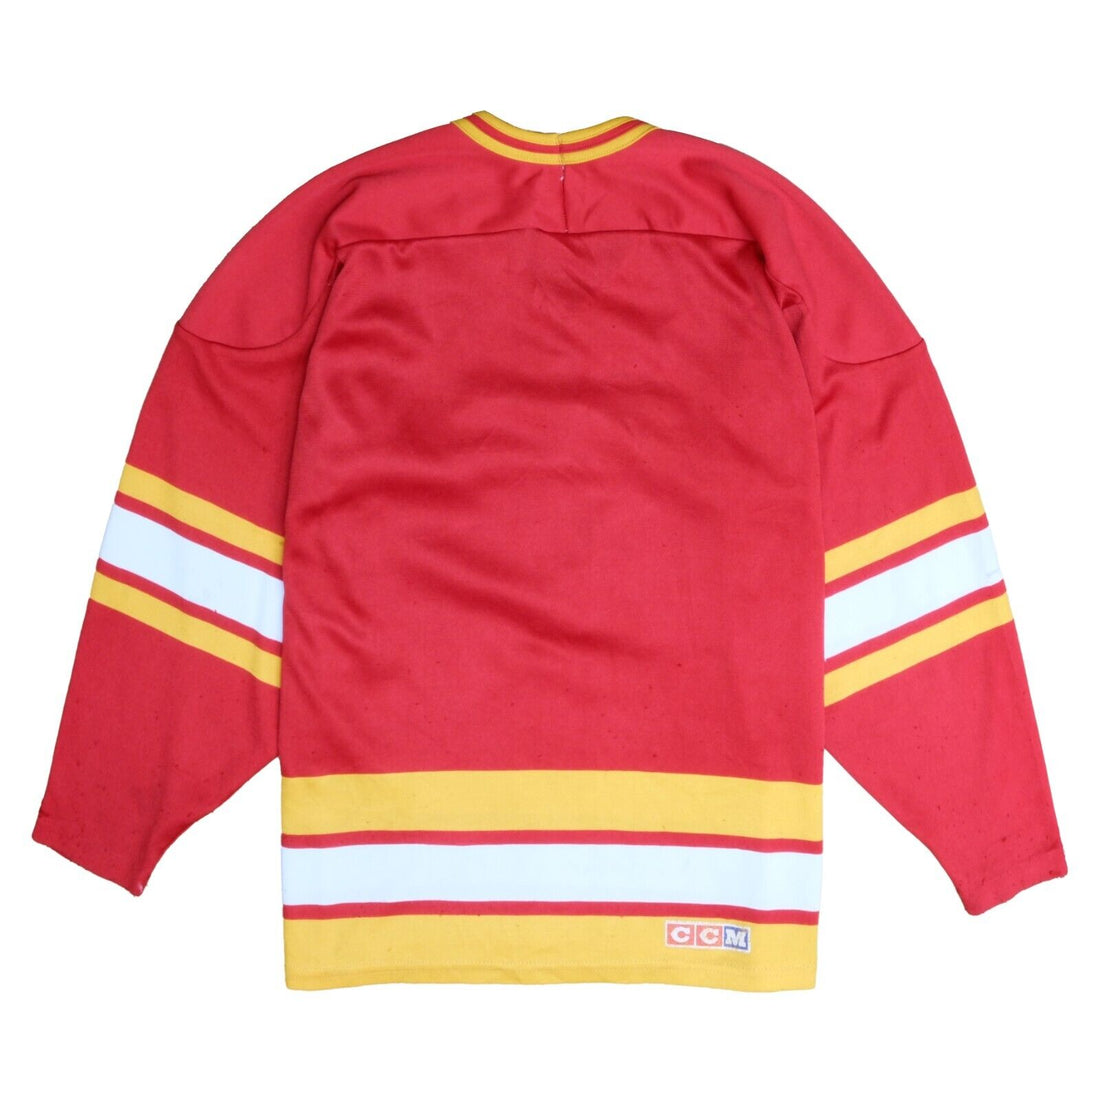 Vintage Calgary Flames CCM Maska Hockey Jersey Size Medium NHL